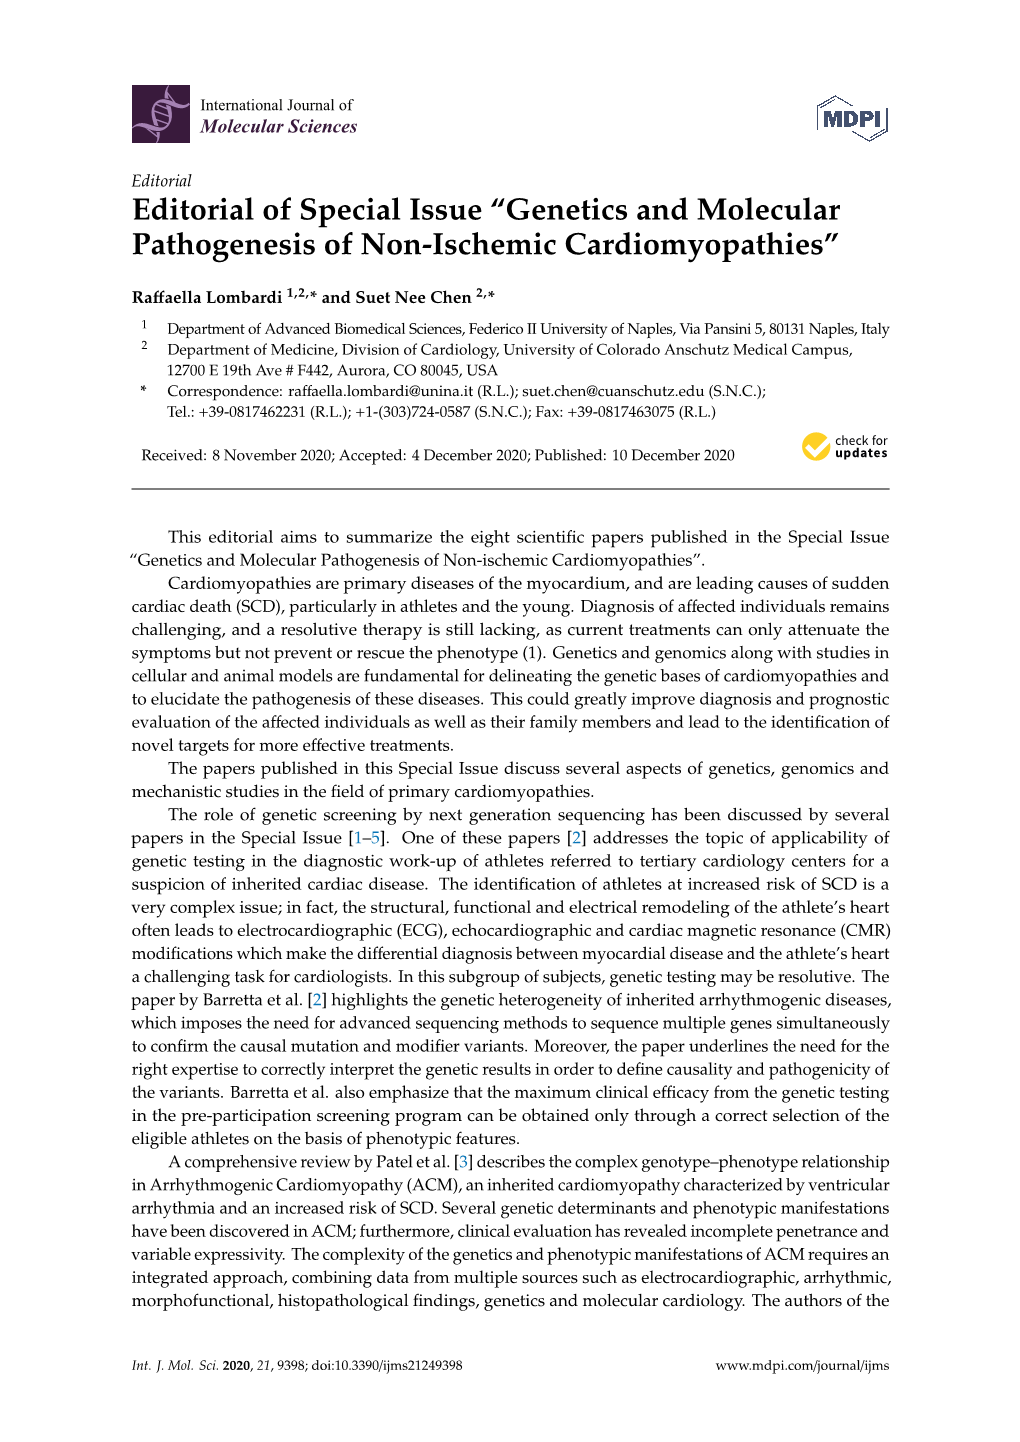 Genetics and Molecular Pathogenesis of Non-Ischemic Cardiomyopathies”